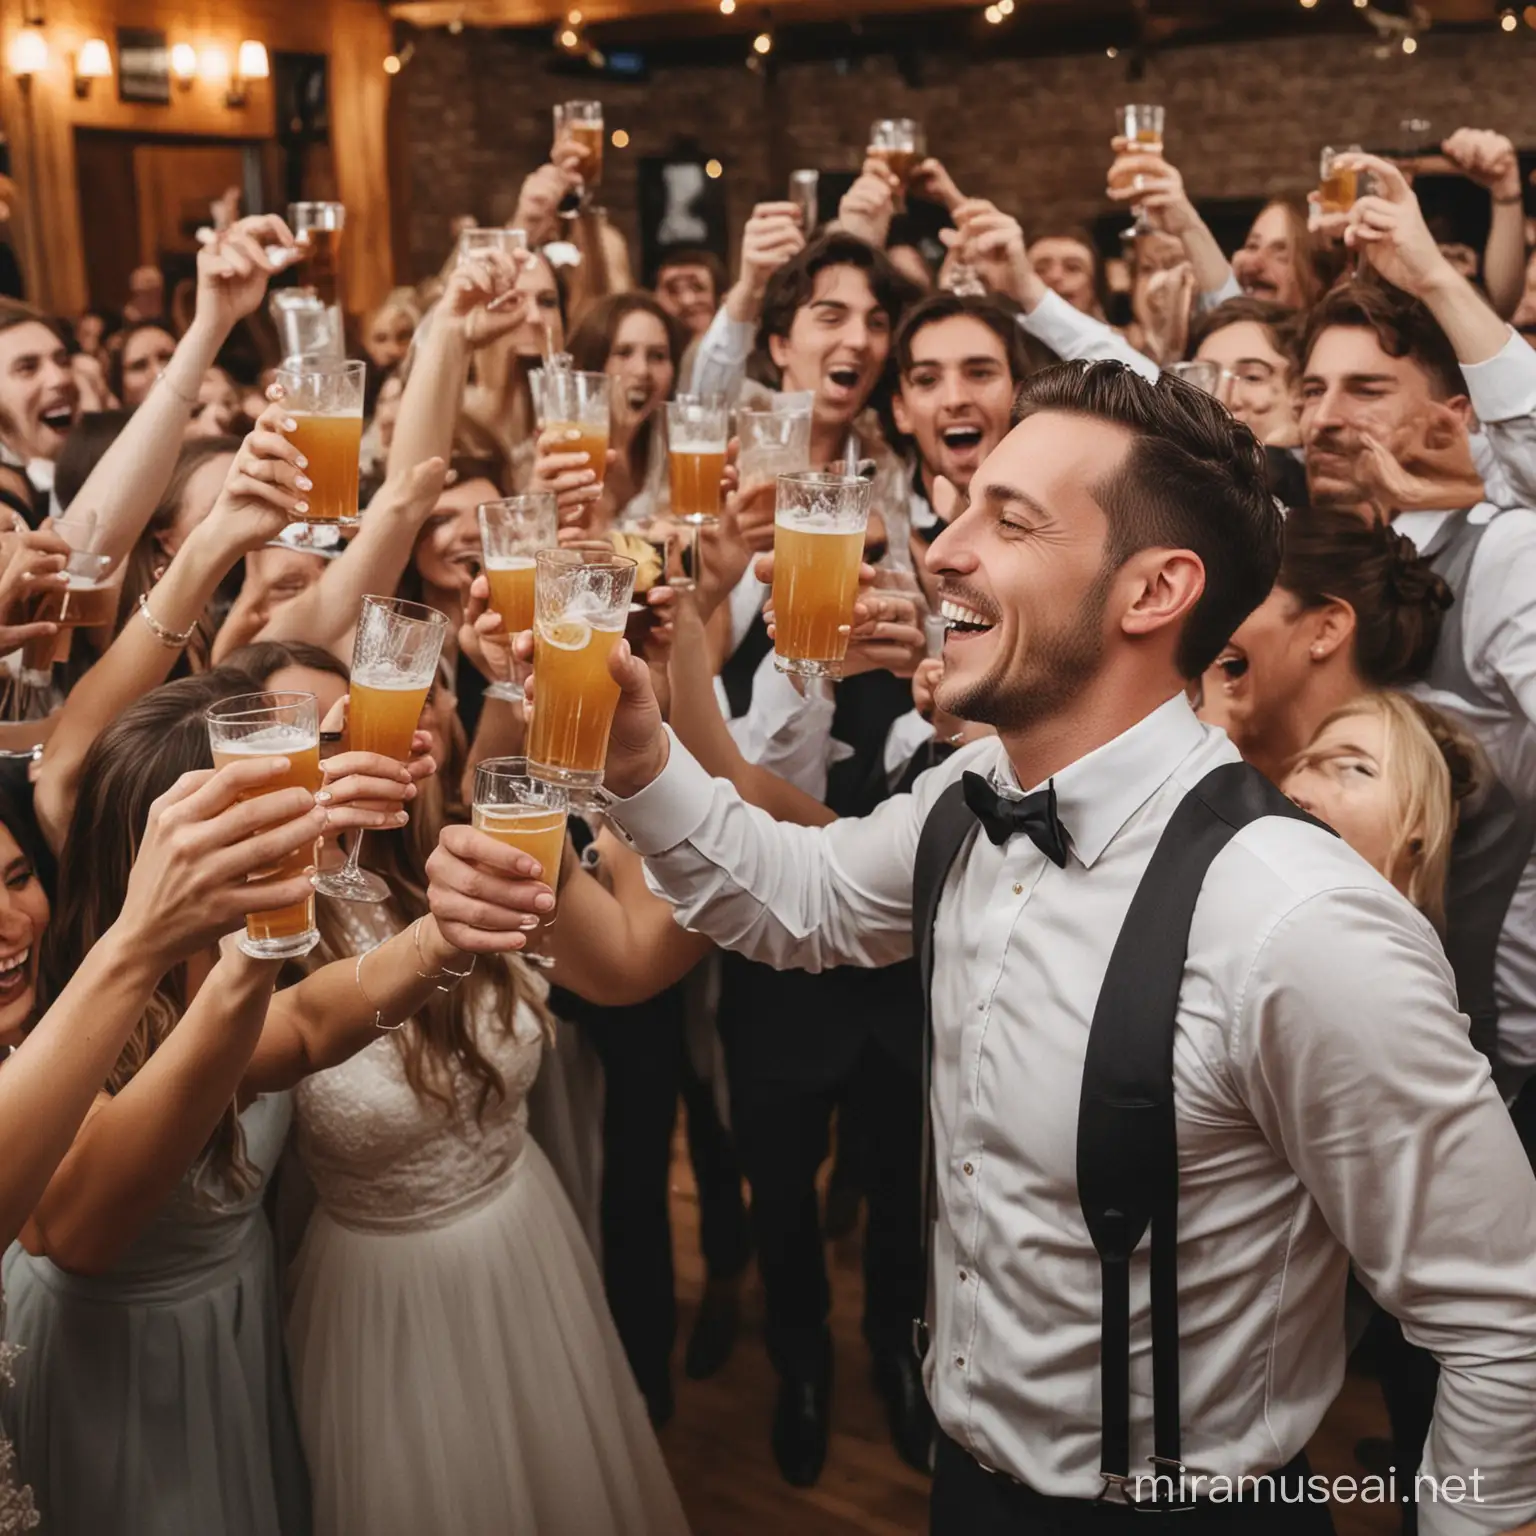 Joyful Wedding Reception Guests Enjoying Refreshing Drinks